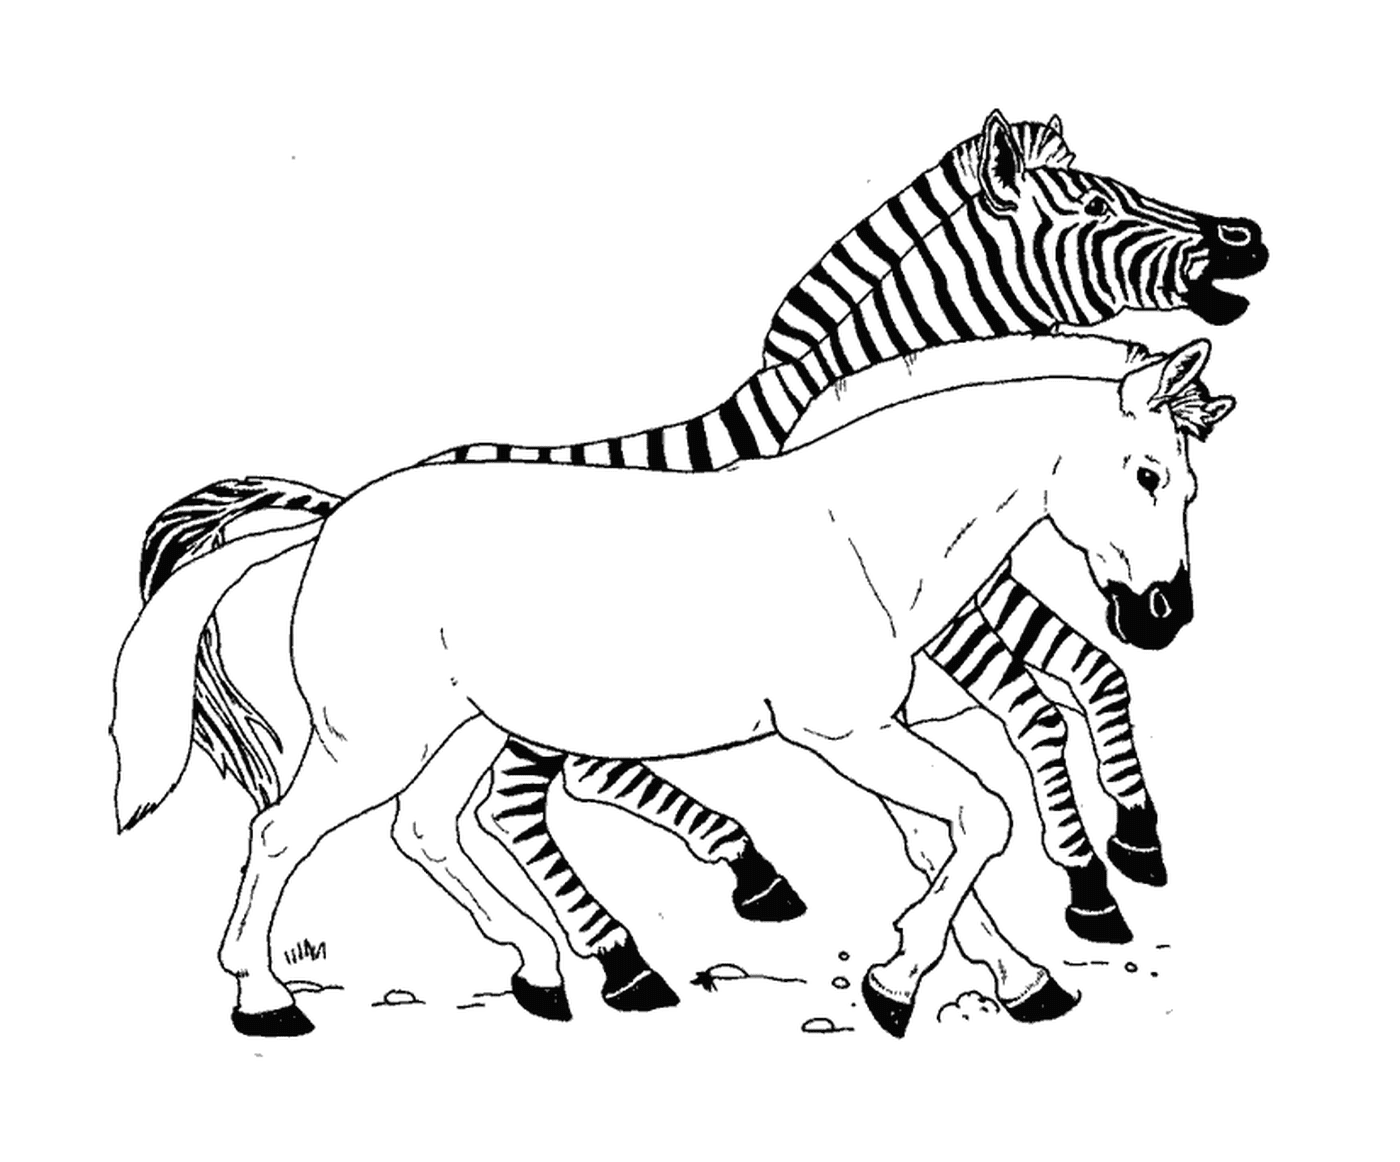  Corrida louca entre zebras 